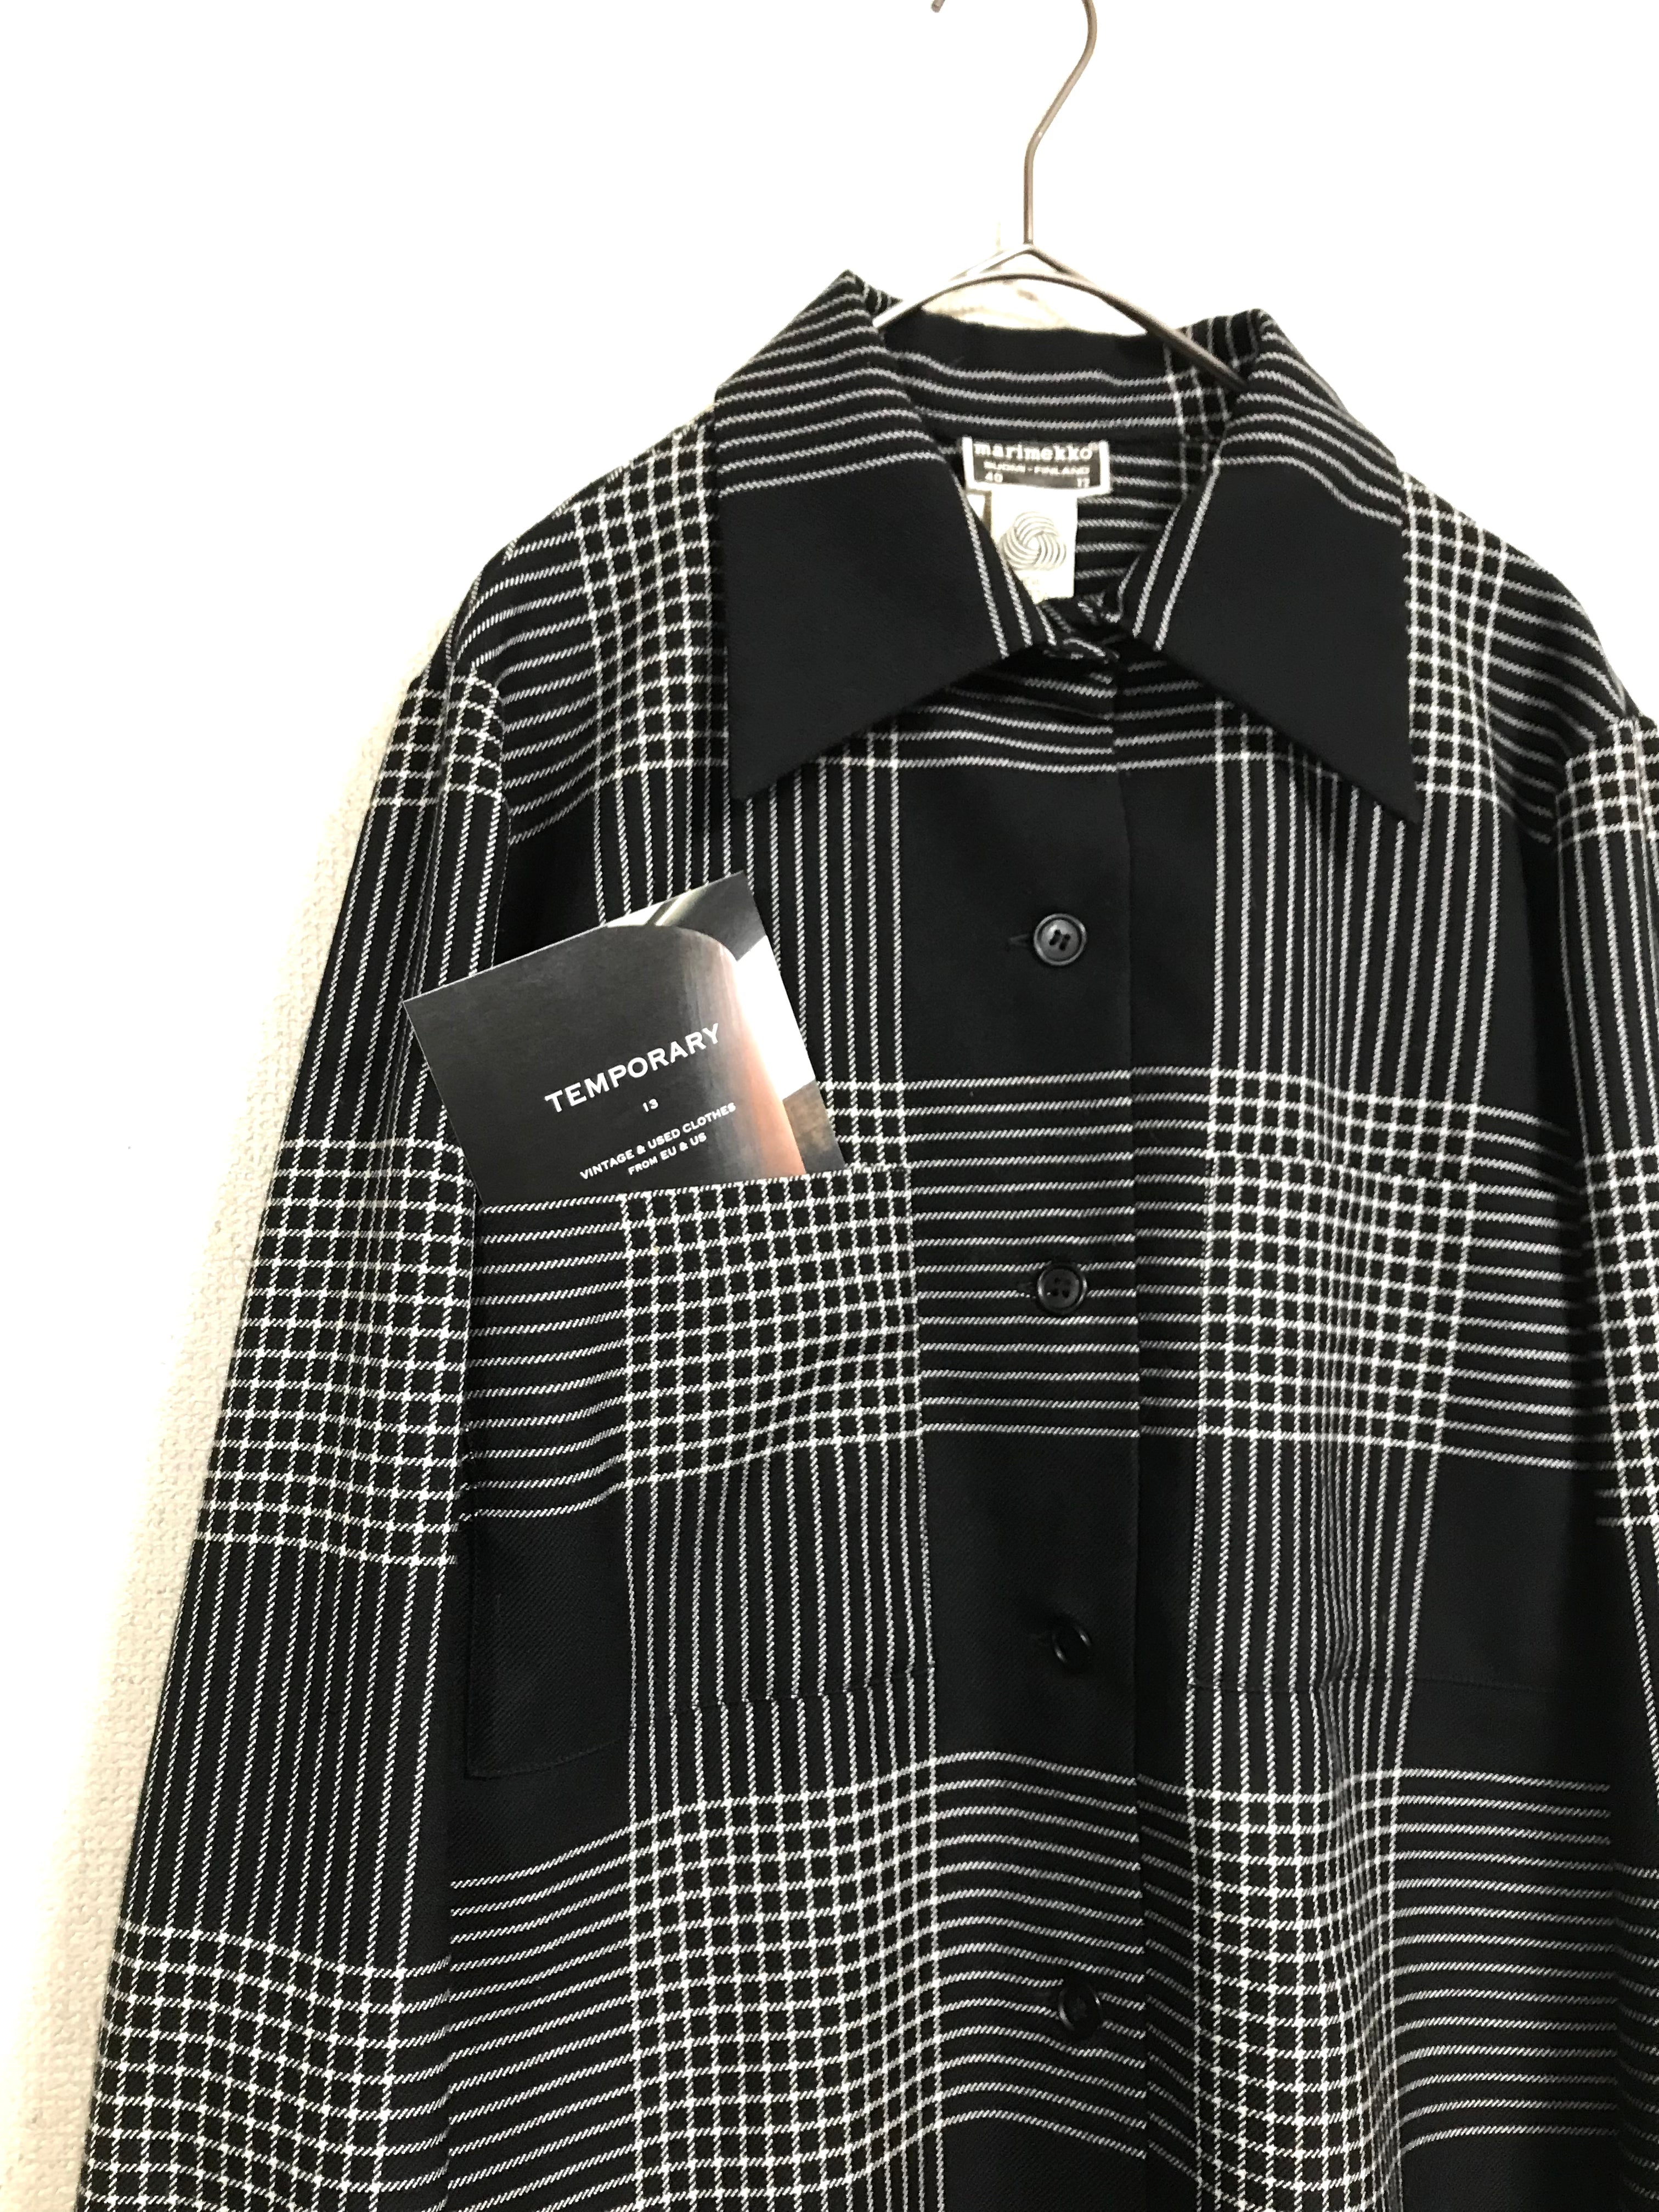 Marimekko monotone plaid wool shirt